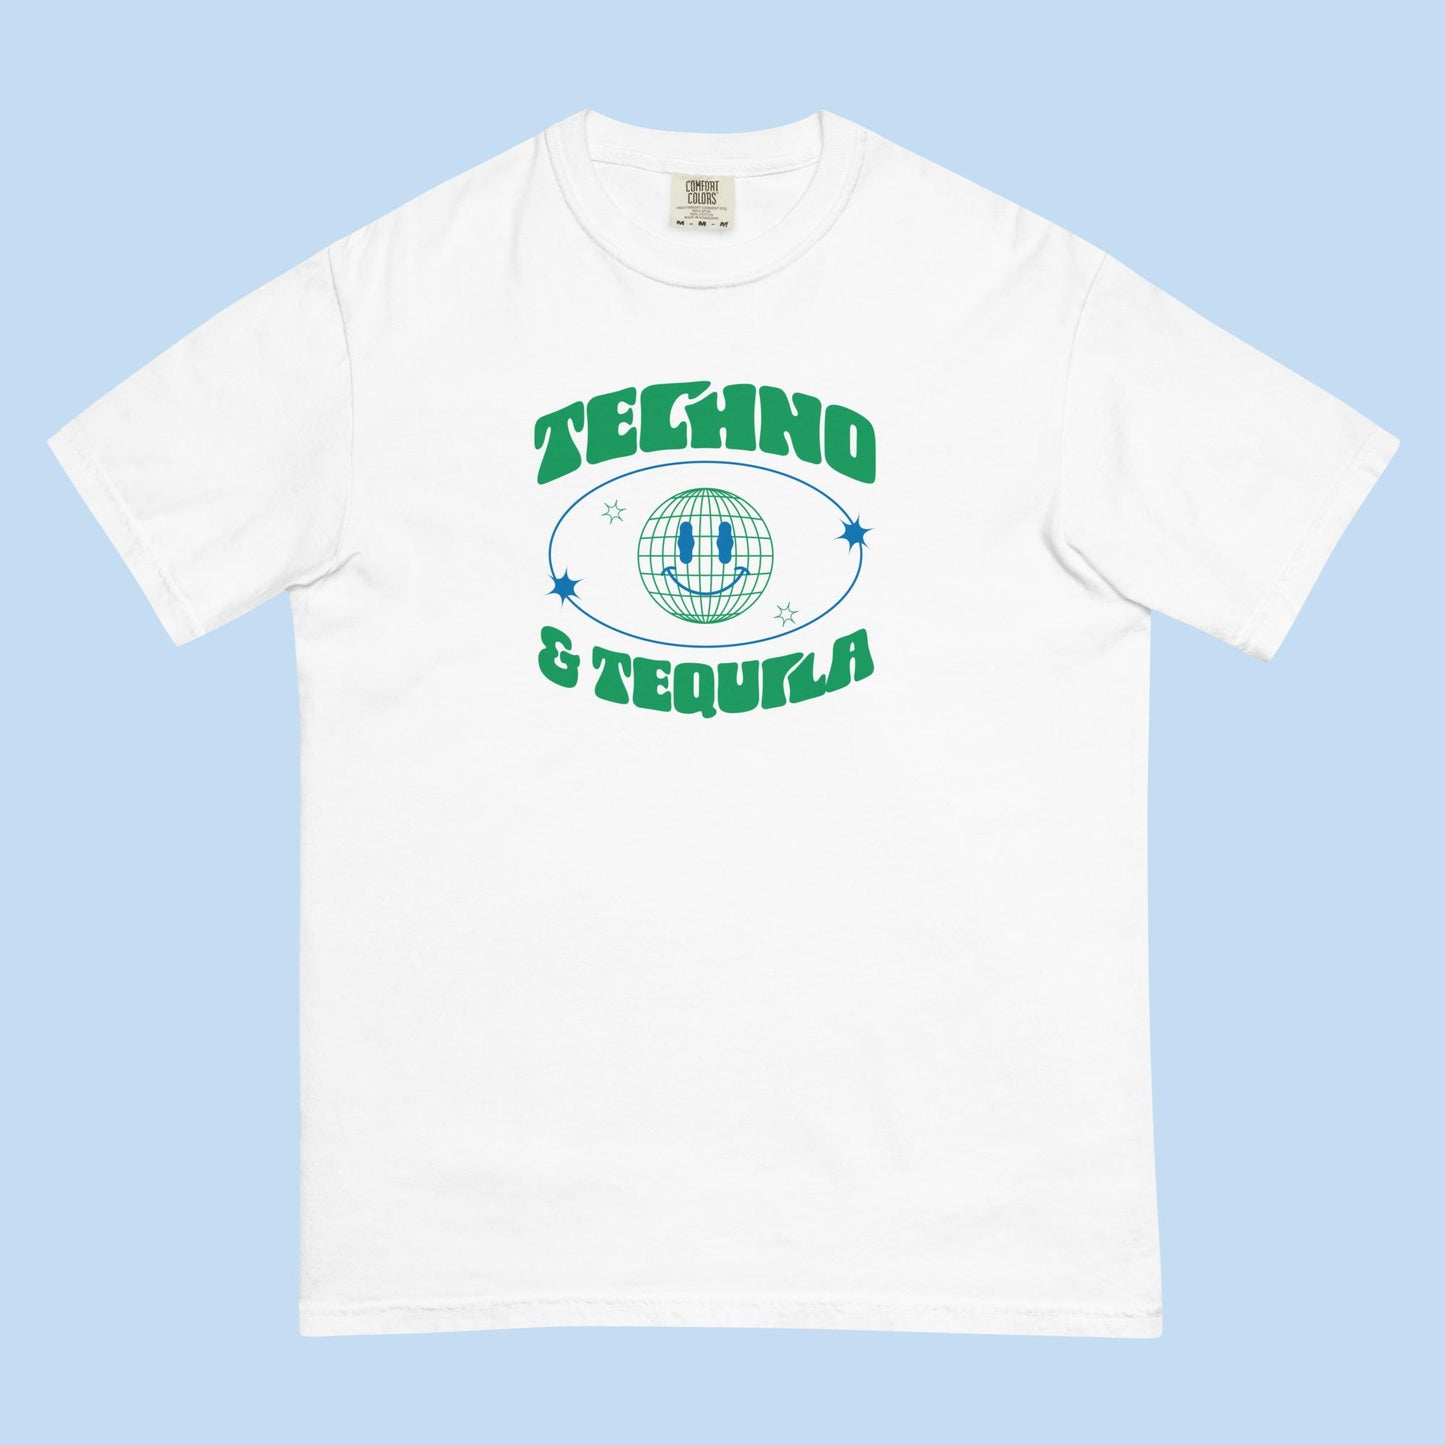 Techno & Tequila Garment-Dyed Heavyweight T-Shirt